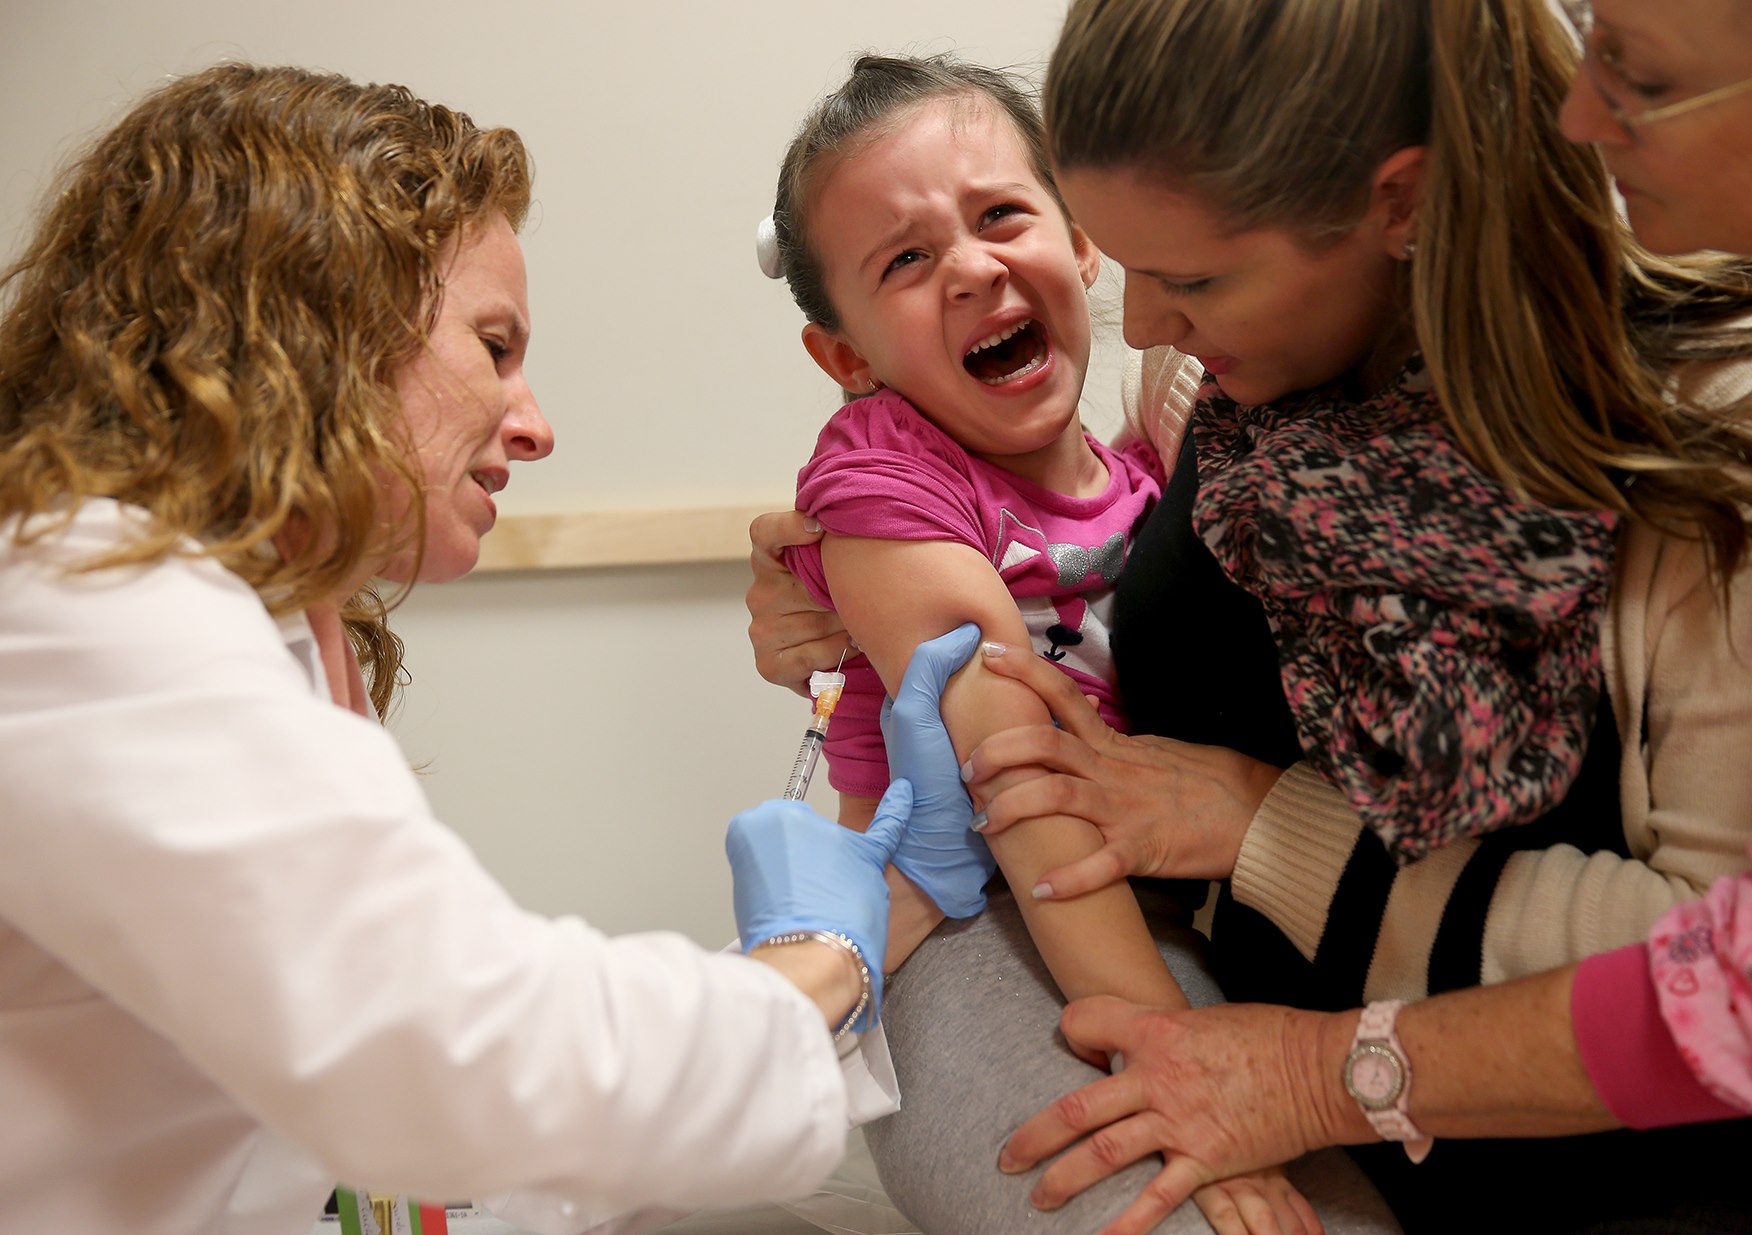 NEWSFLASH: Measles is NO BIG DEAL